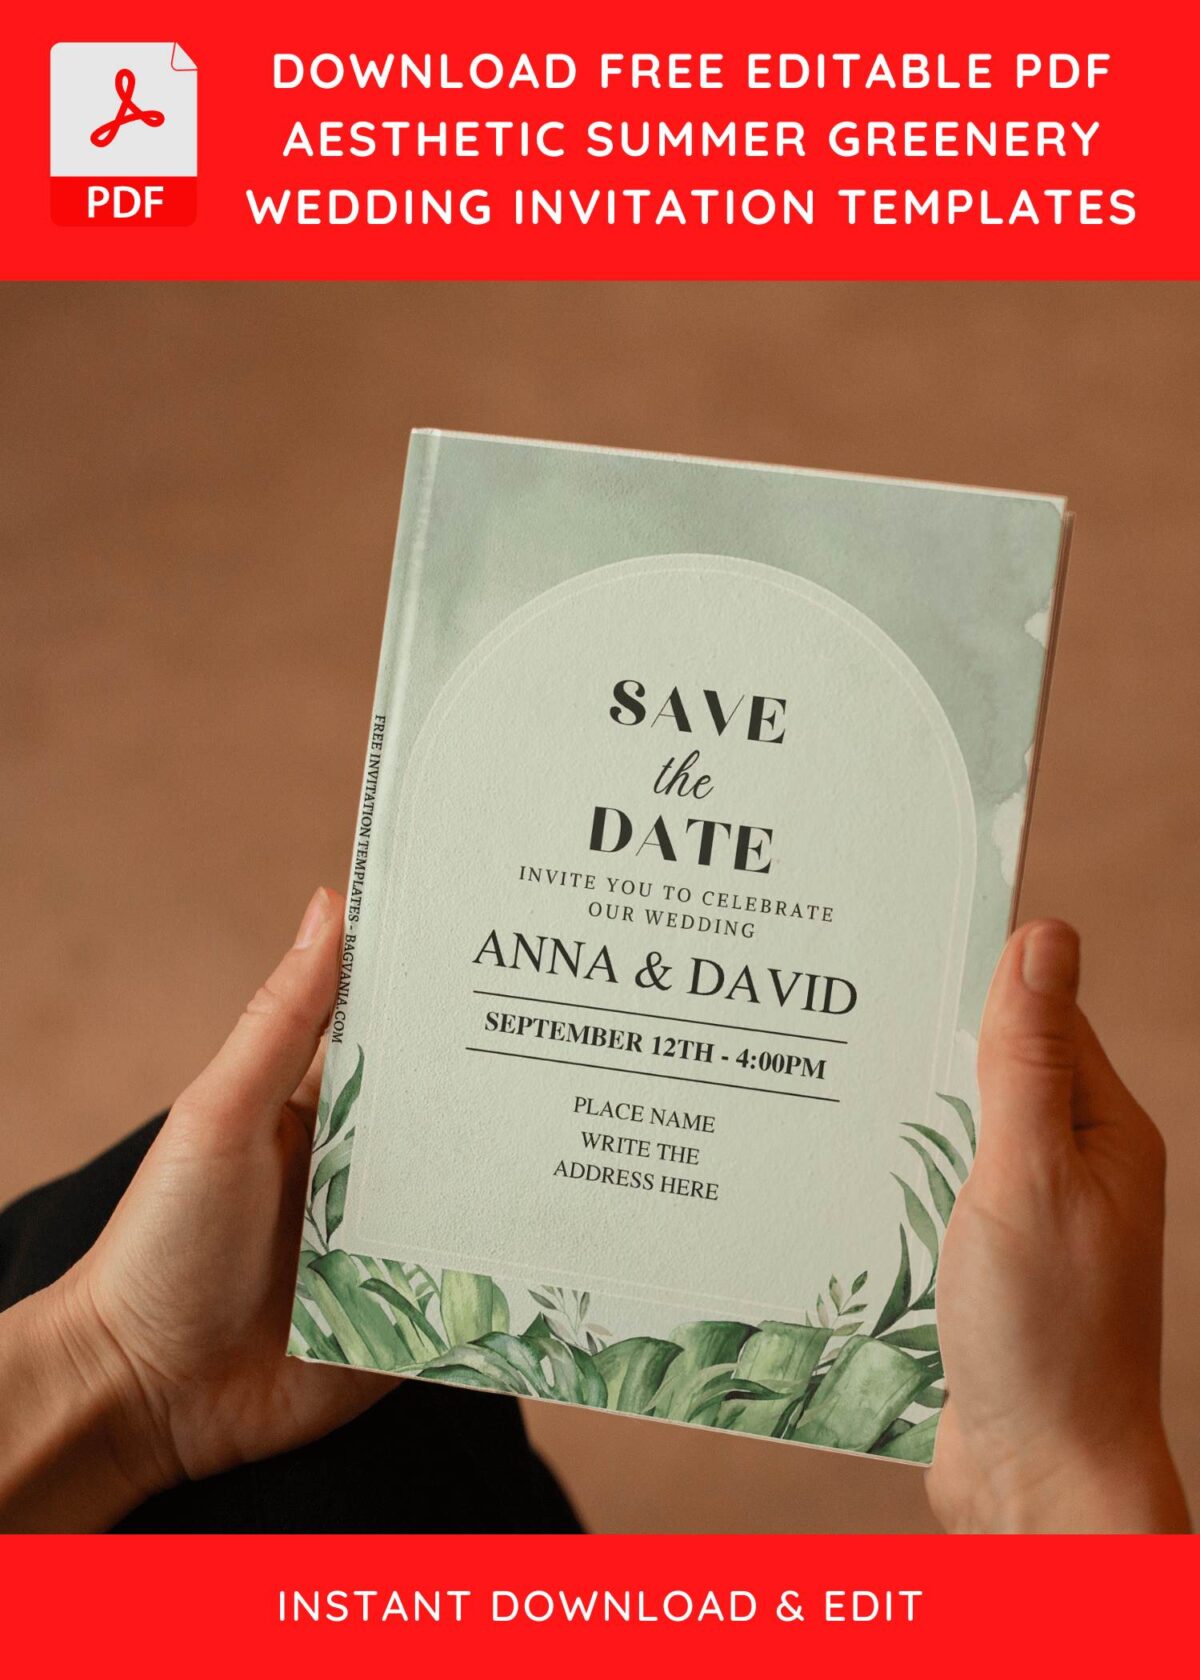 (Free Editable PDF) Classy Greenhouse Greenery Wedding Invitation Templates with pampas grass